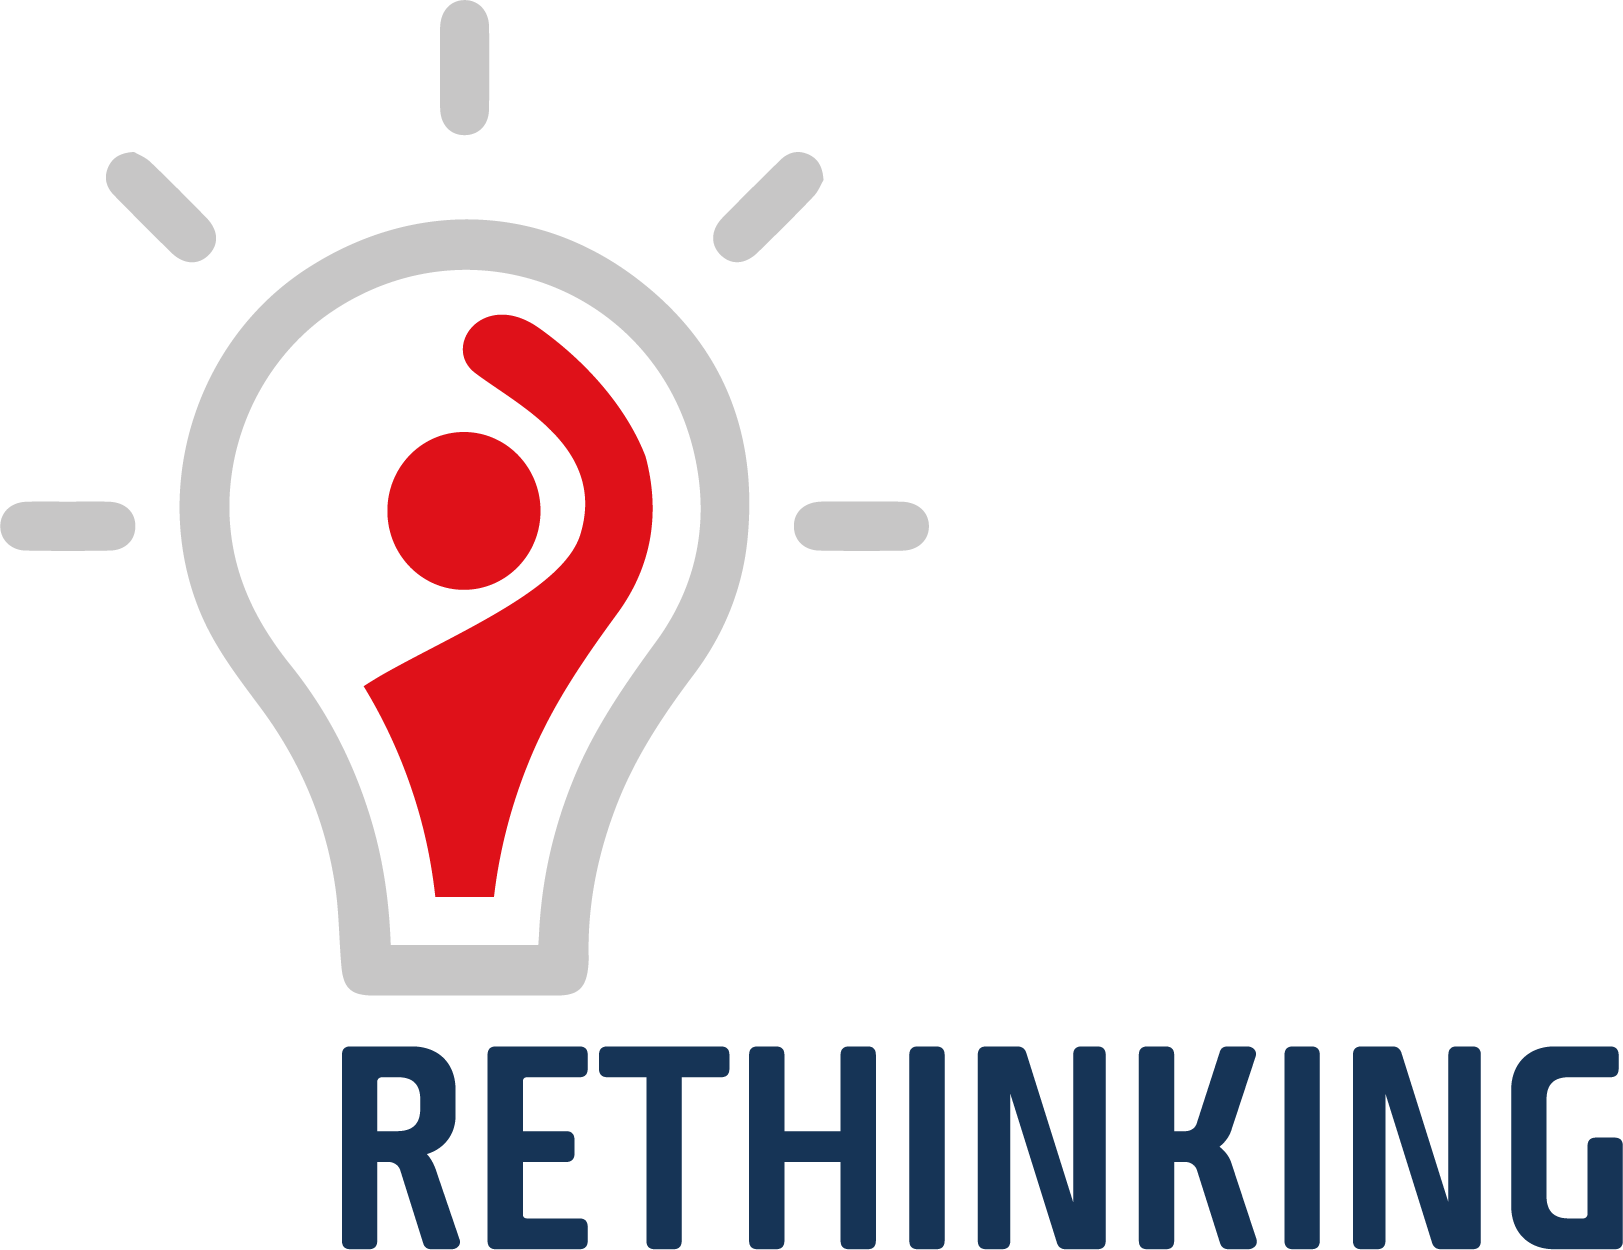 Re-thinking-logo